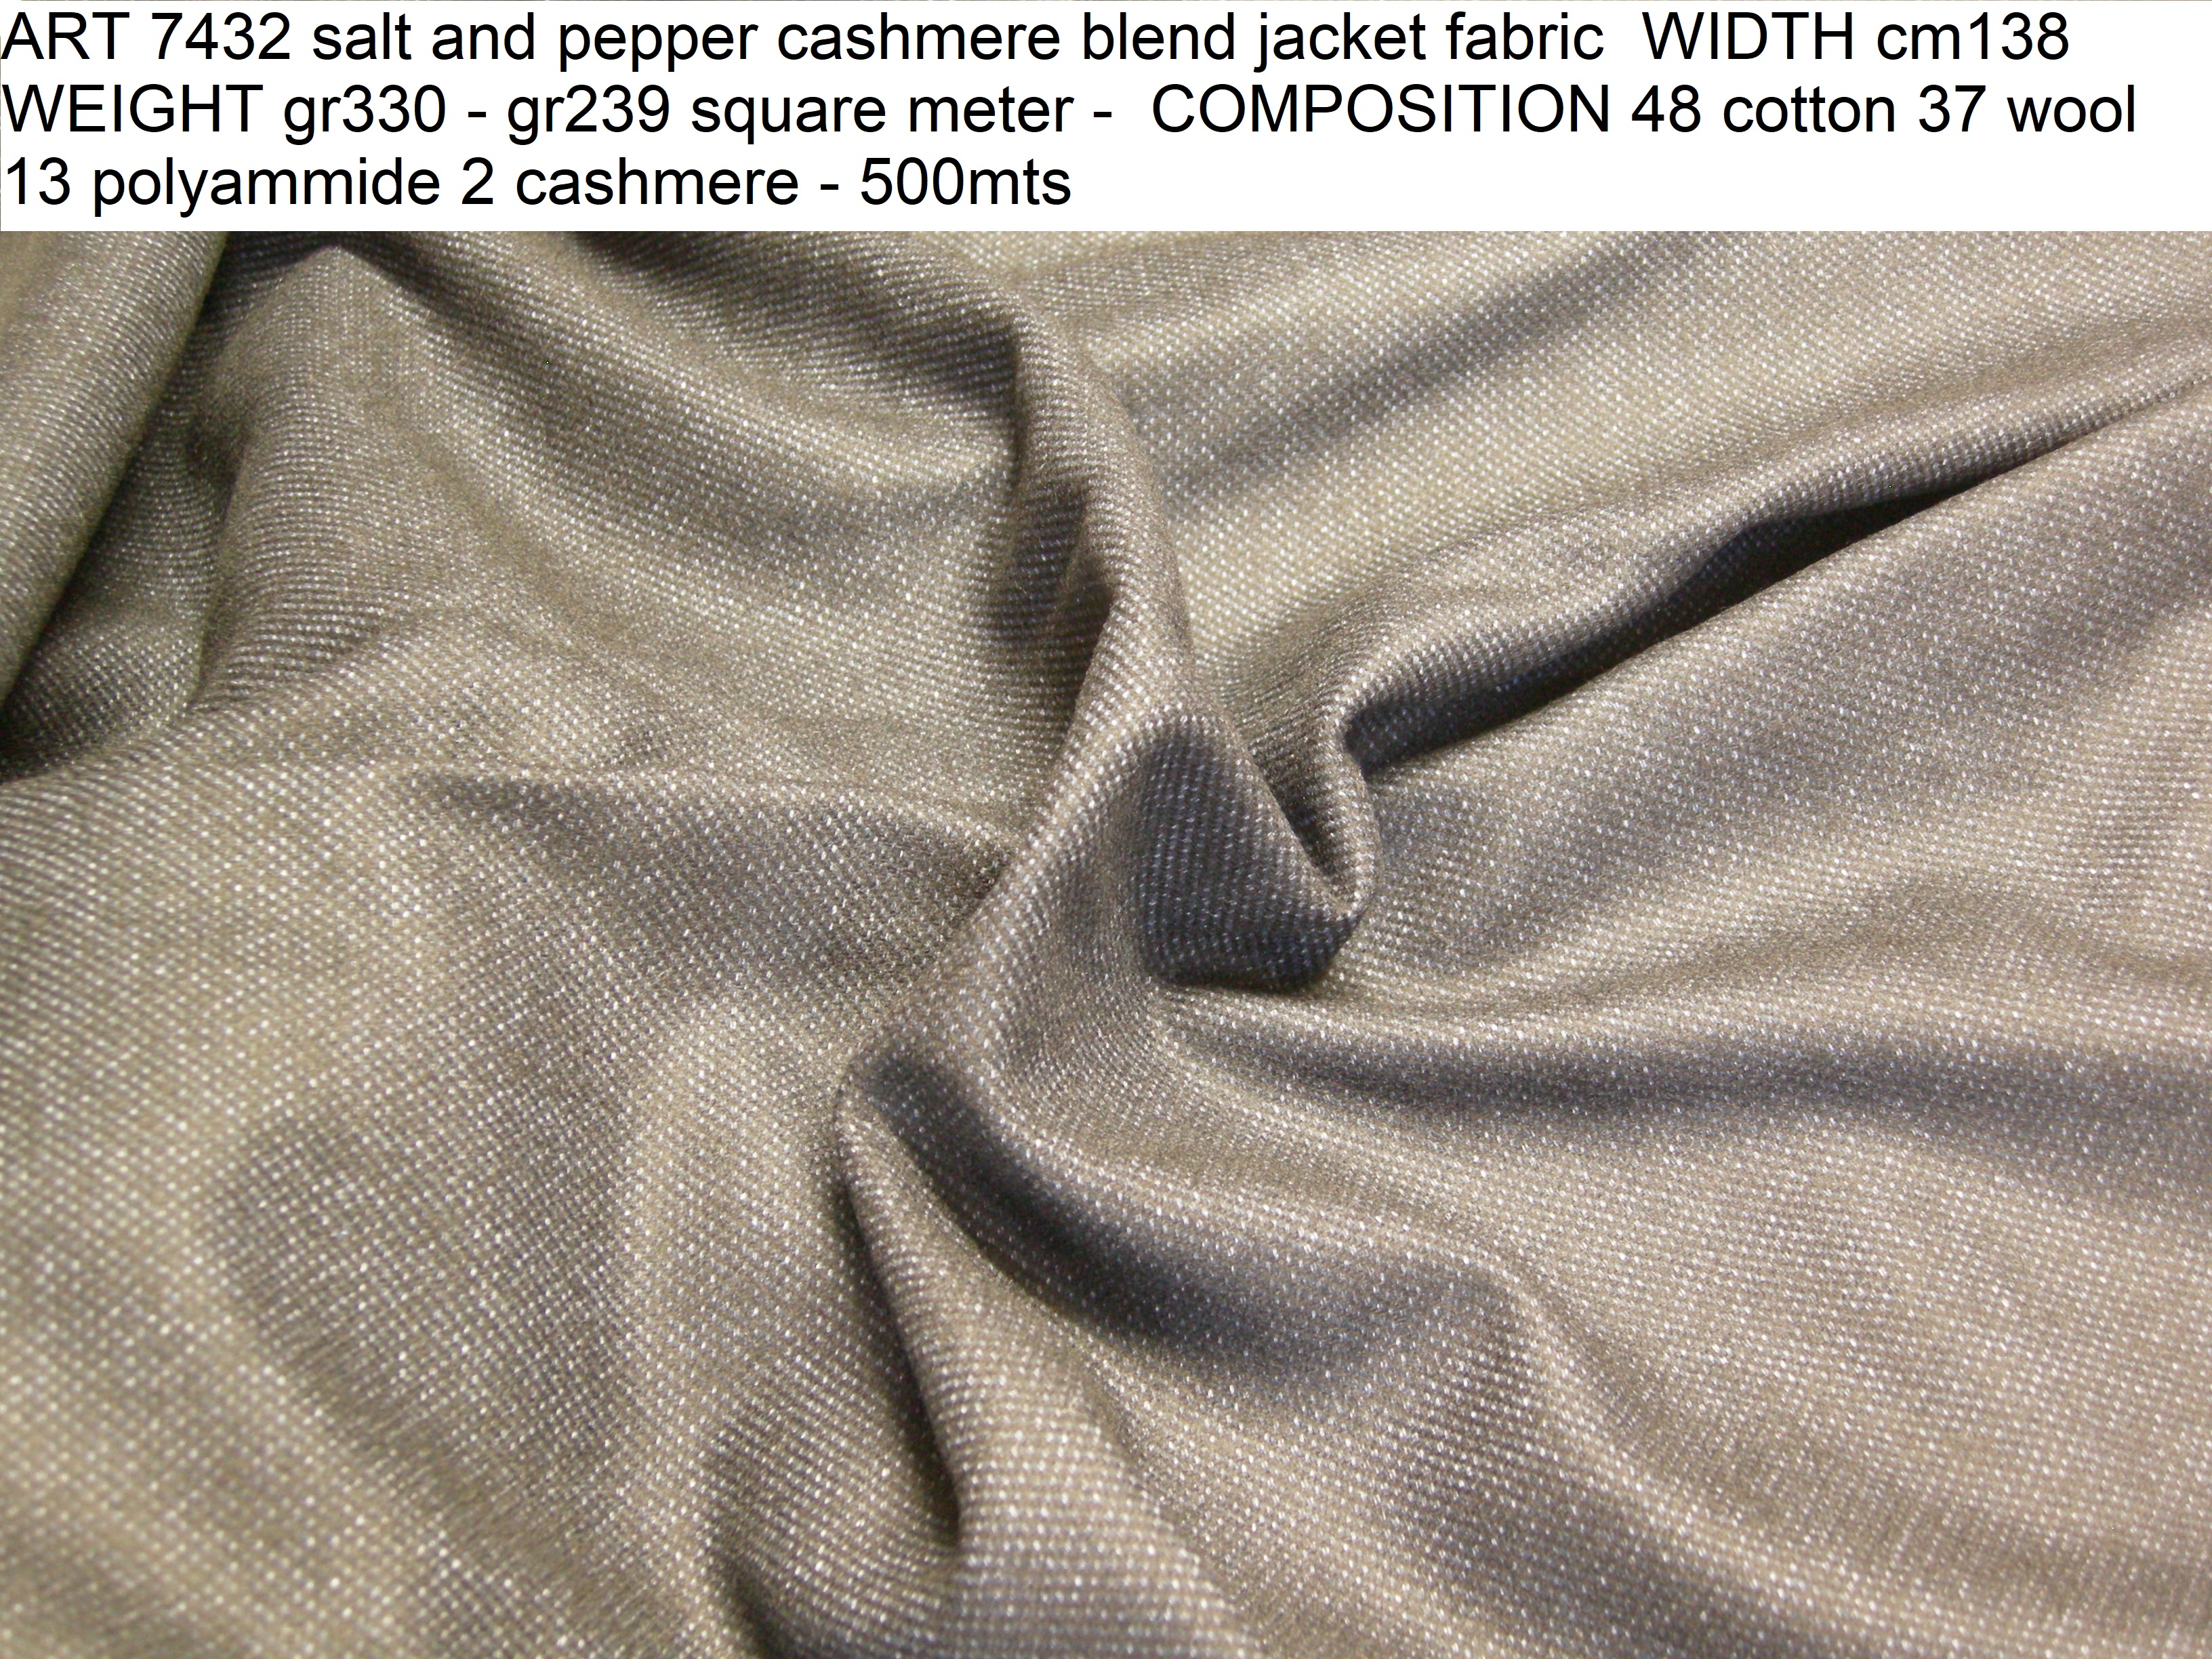 ART 7432 salt and pepper cashmere blend jacket fabric WIDTH cm138 WEIGHT gr330 - gr239 square meter - COMPOSITION 48 cotton 37 wool 13 polyammide 2 cashmere - 500mts